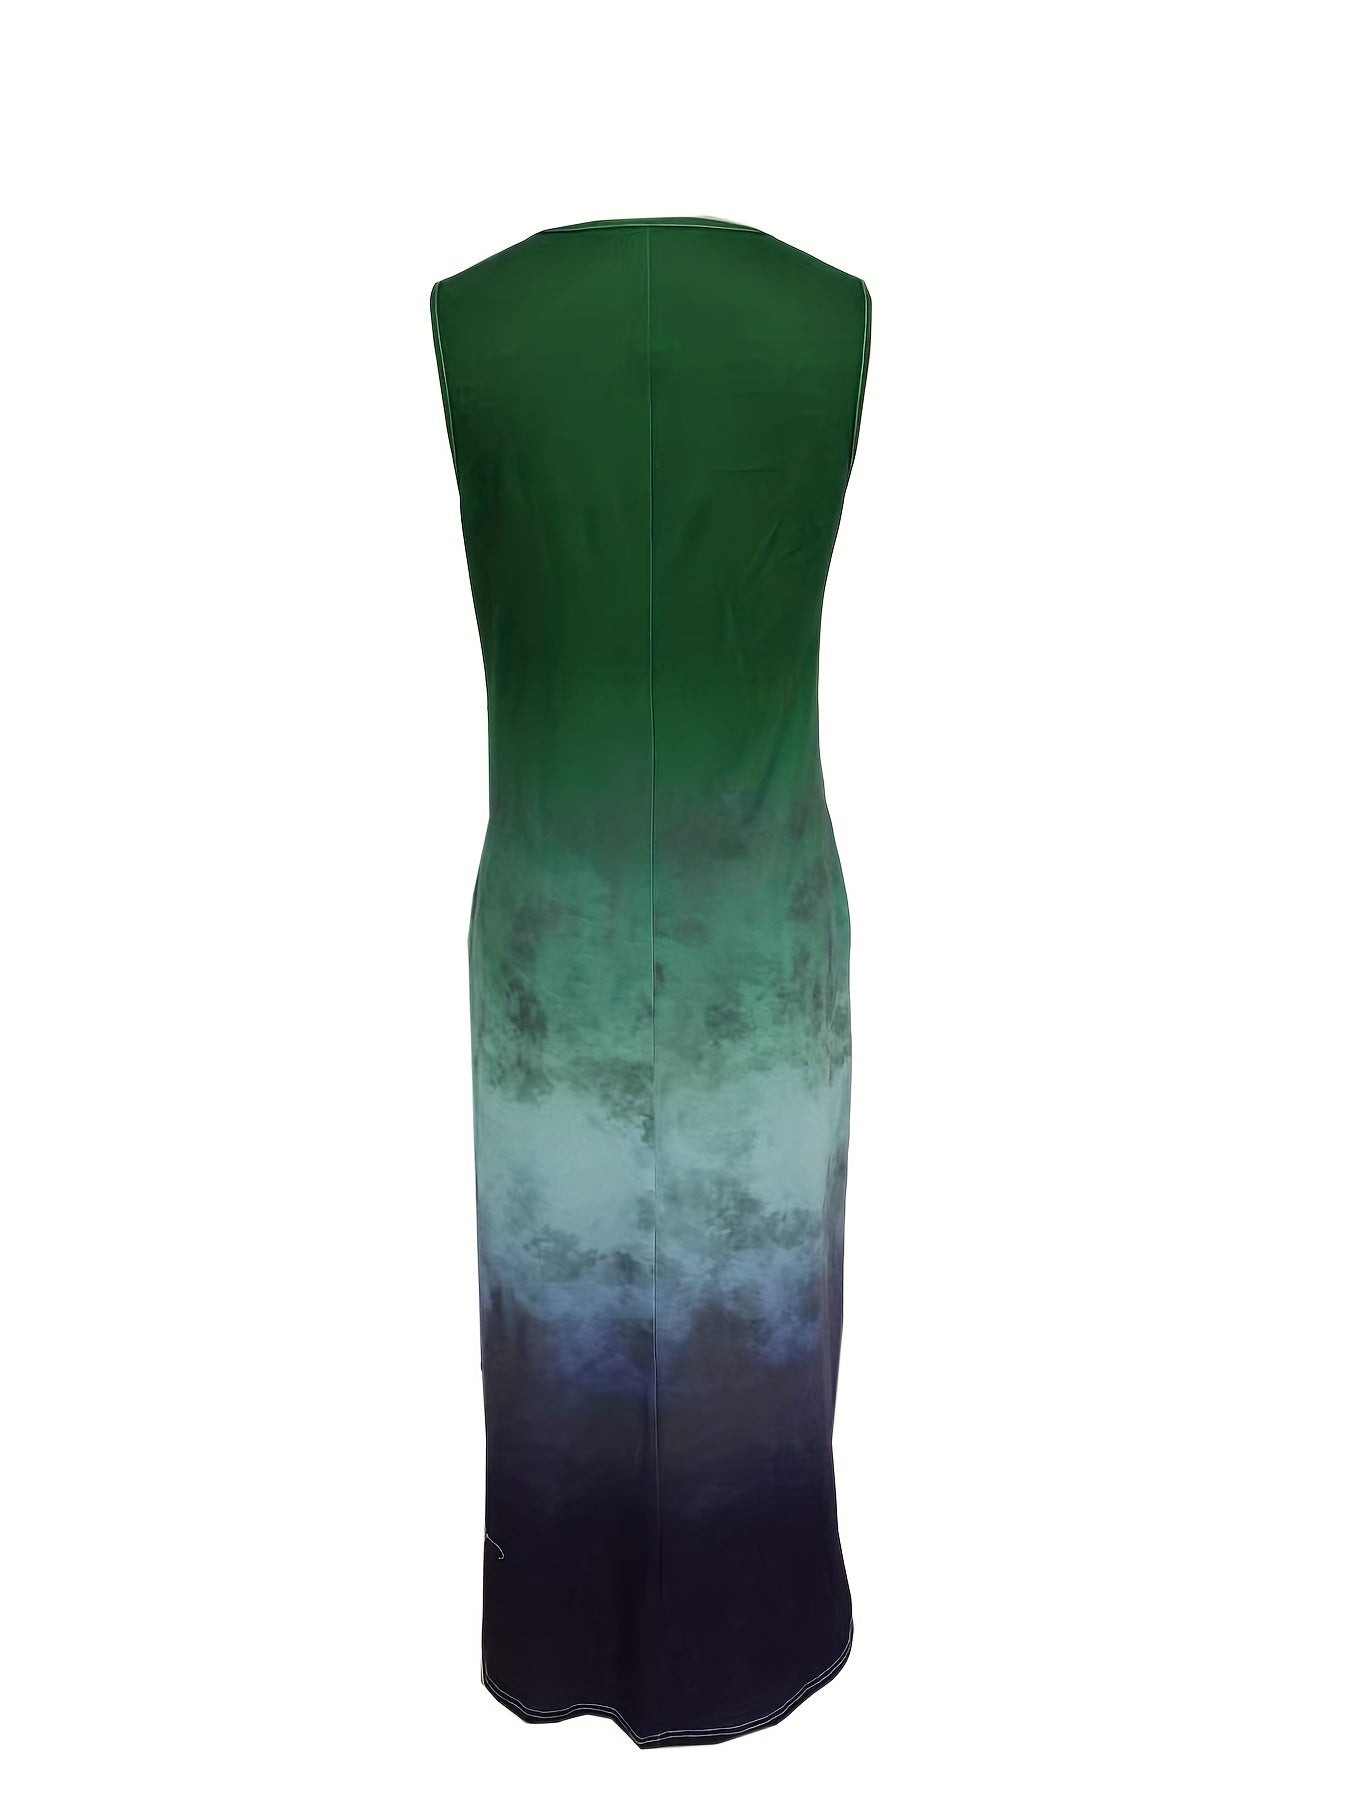 Antmvs Color Block Split Sleeveless Dress, Casual Tank Dress For Spring & Summer, Women's Clothing